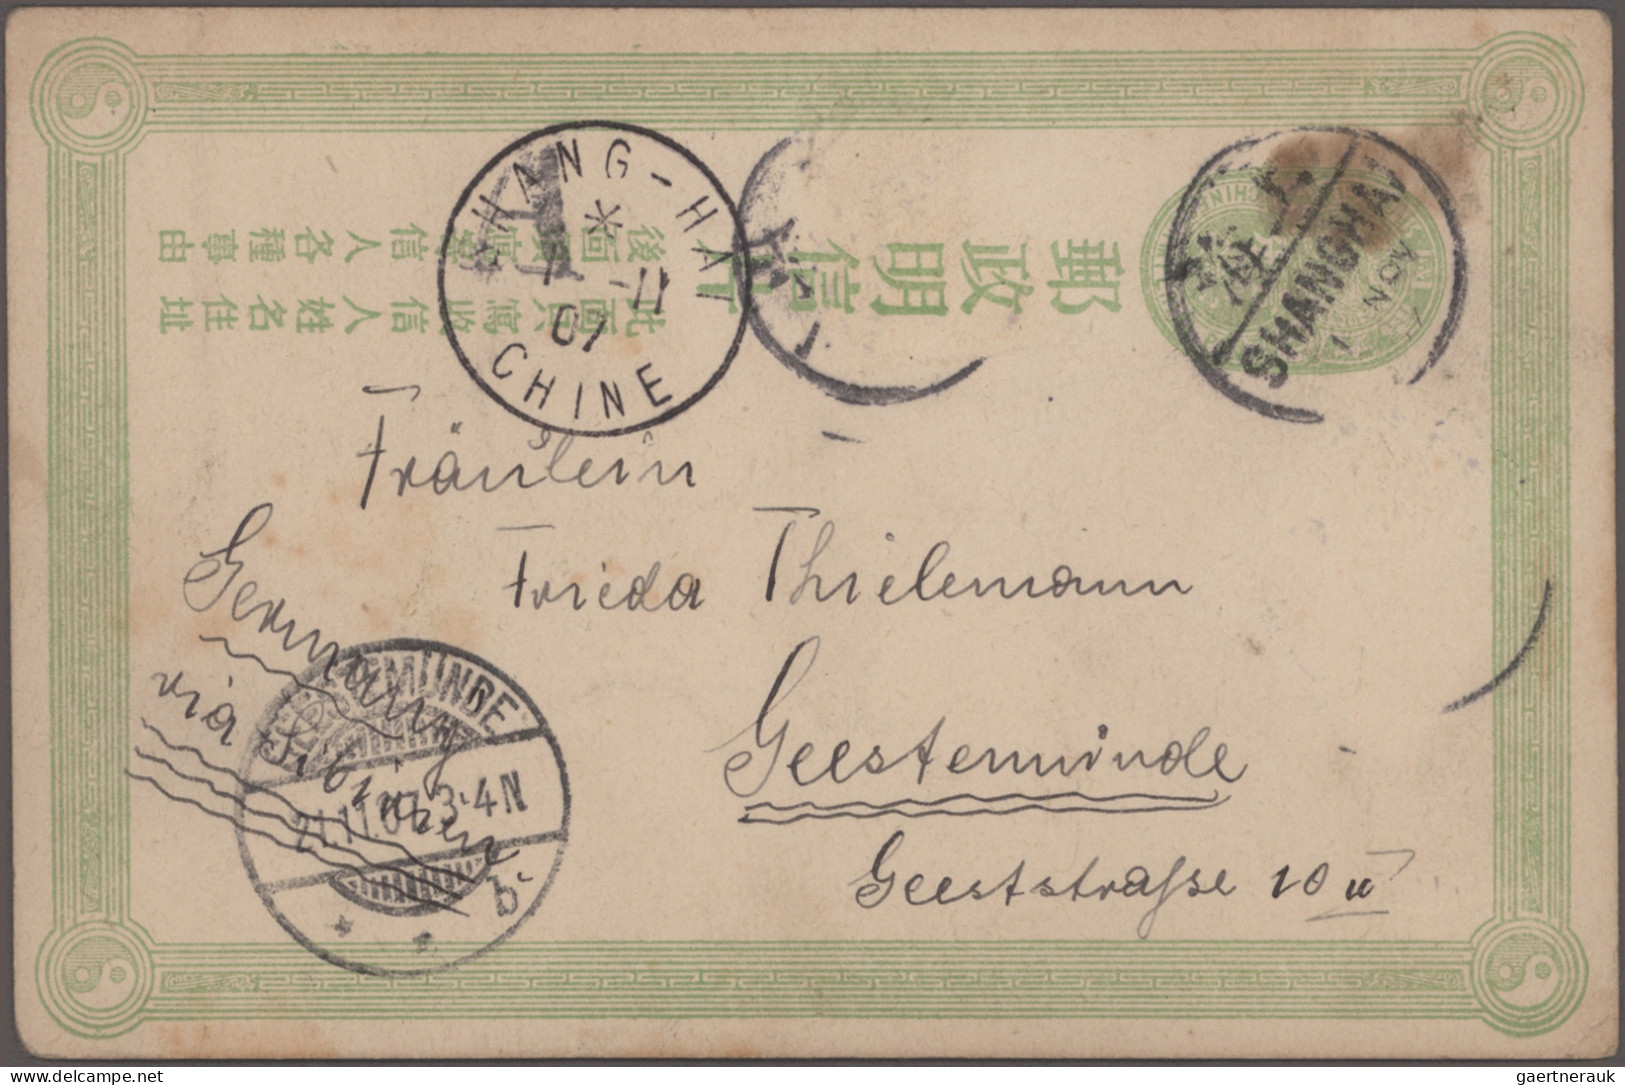 China - Postal stationery: 1897/1936, lot of stationery unused mint (10, inc. 19